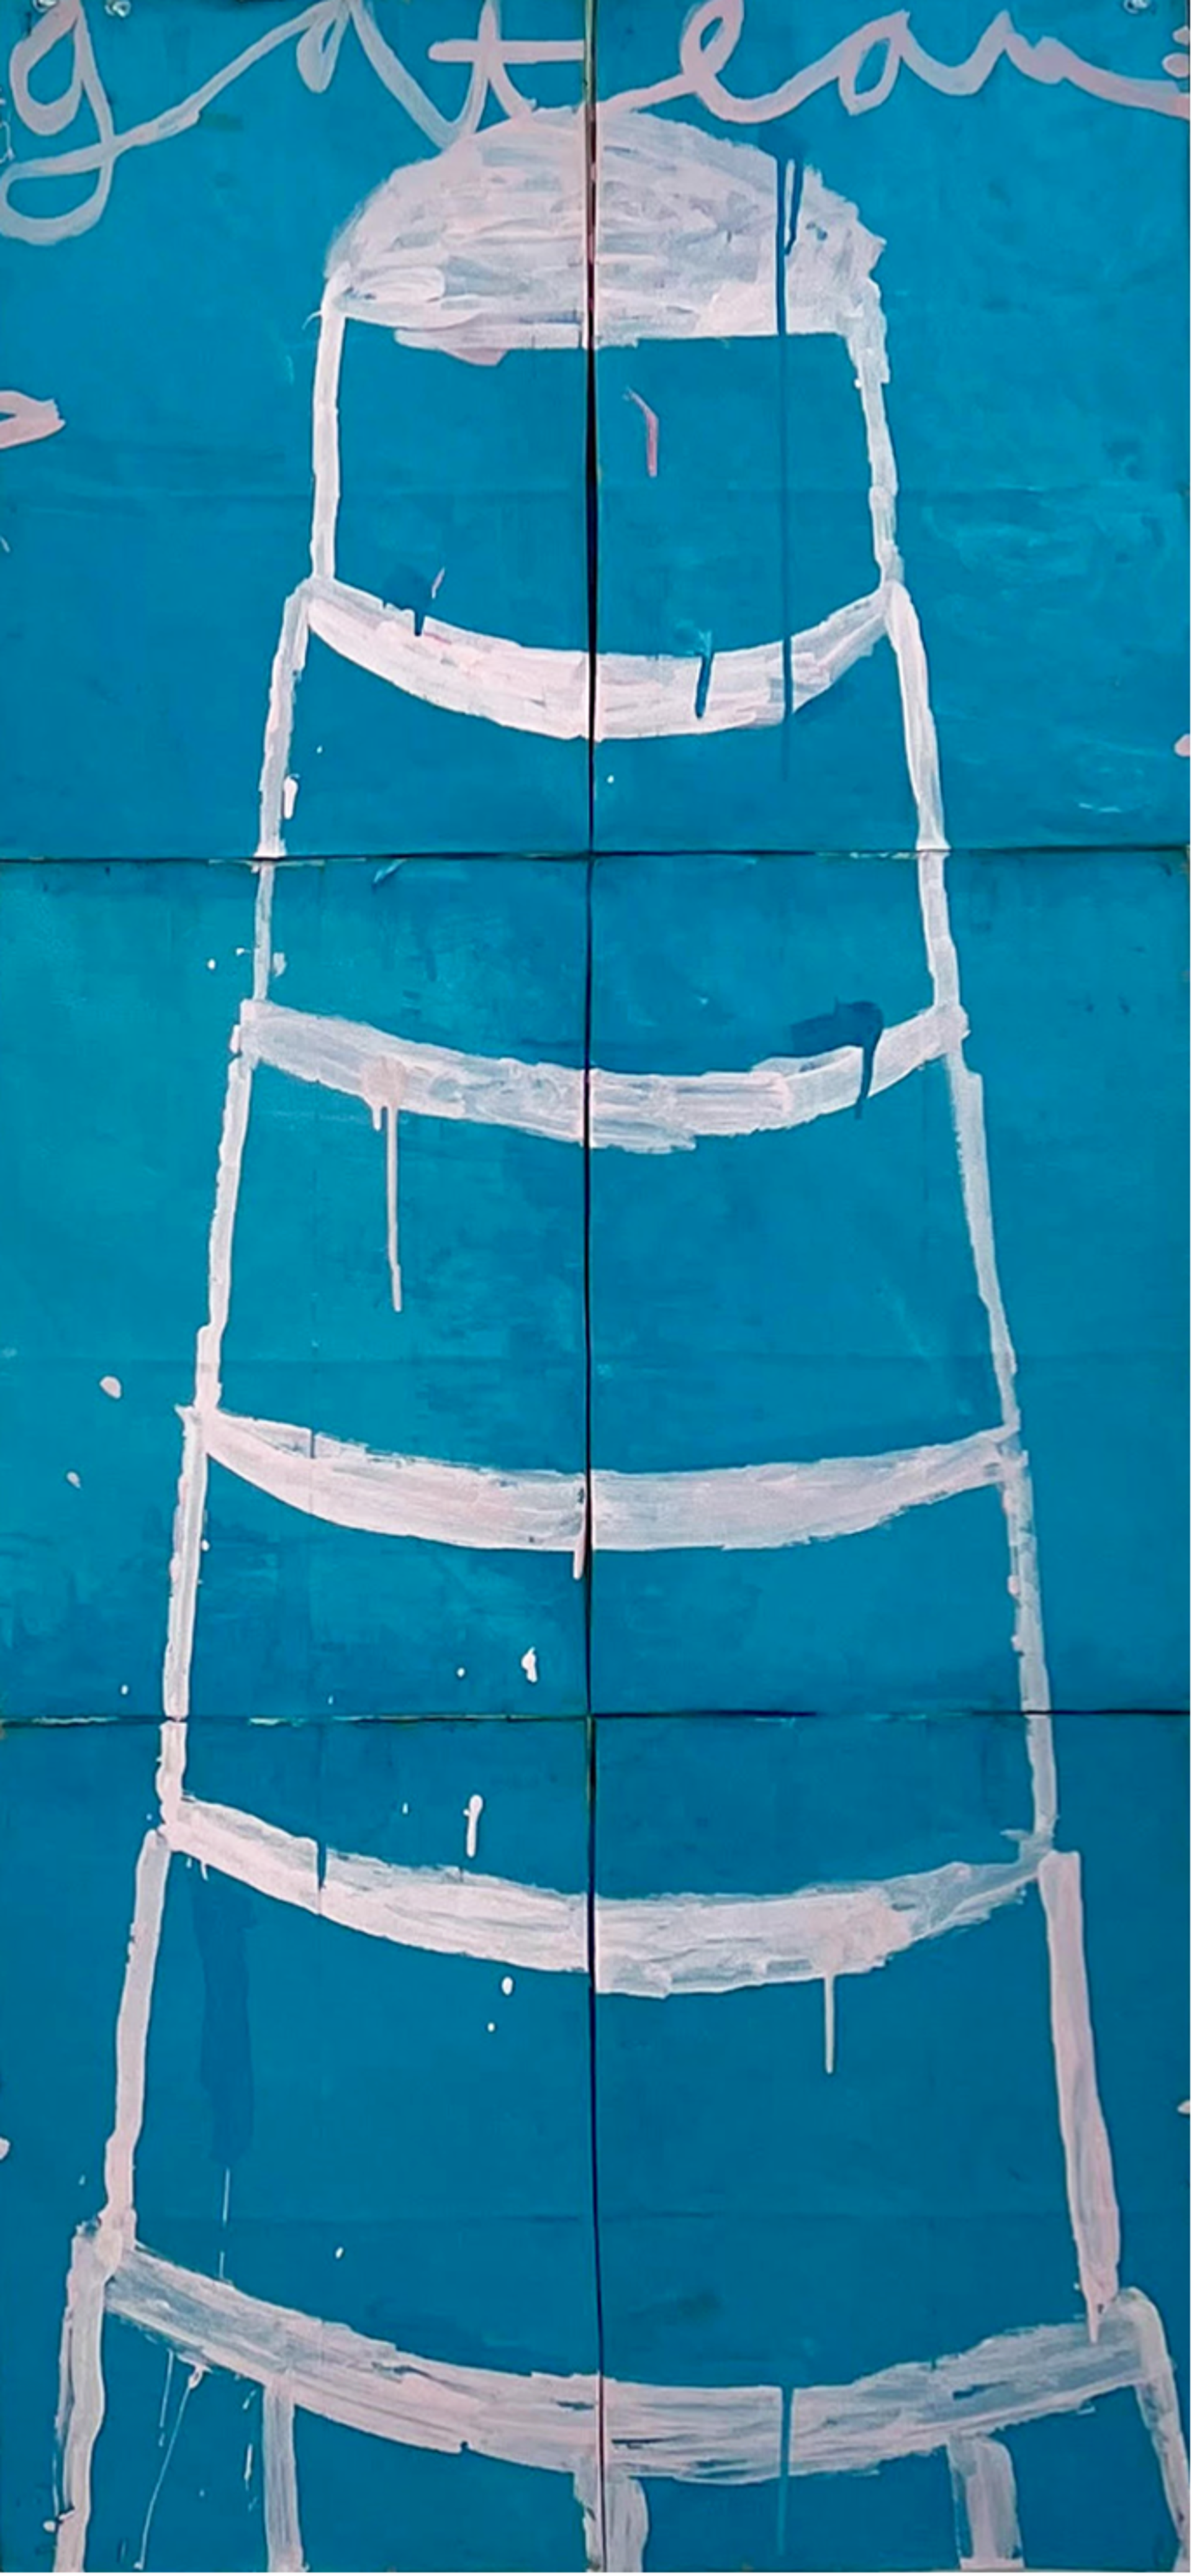 White on Blue (Gateau) by Gary Komarin